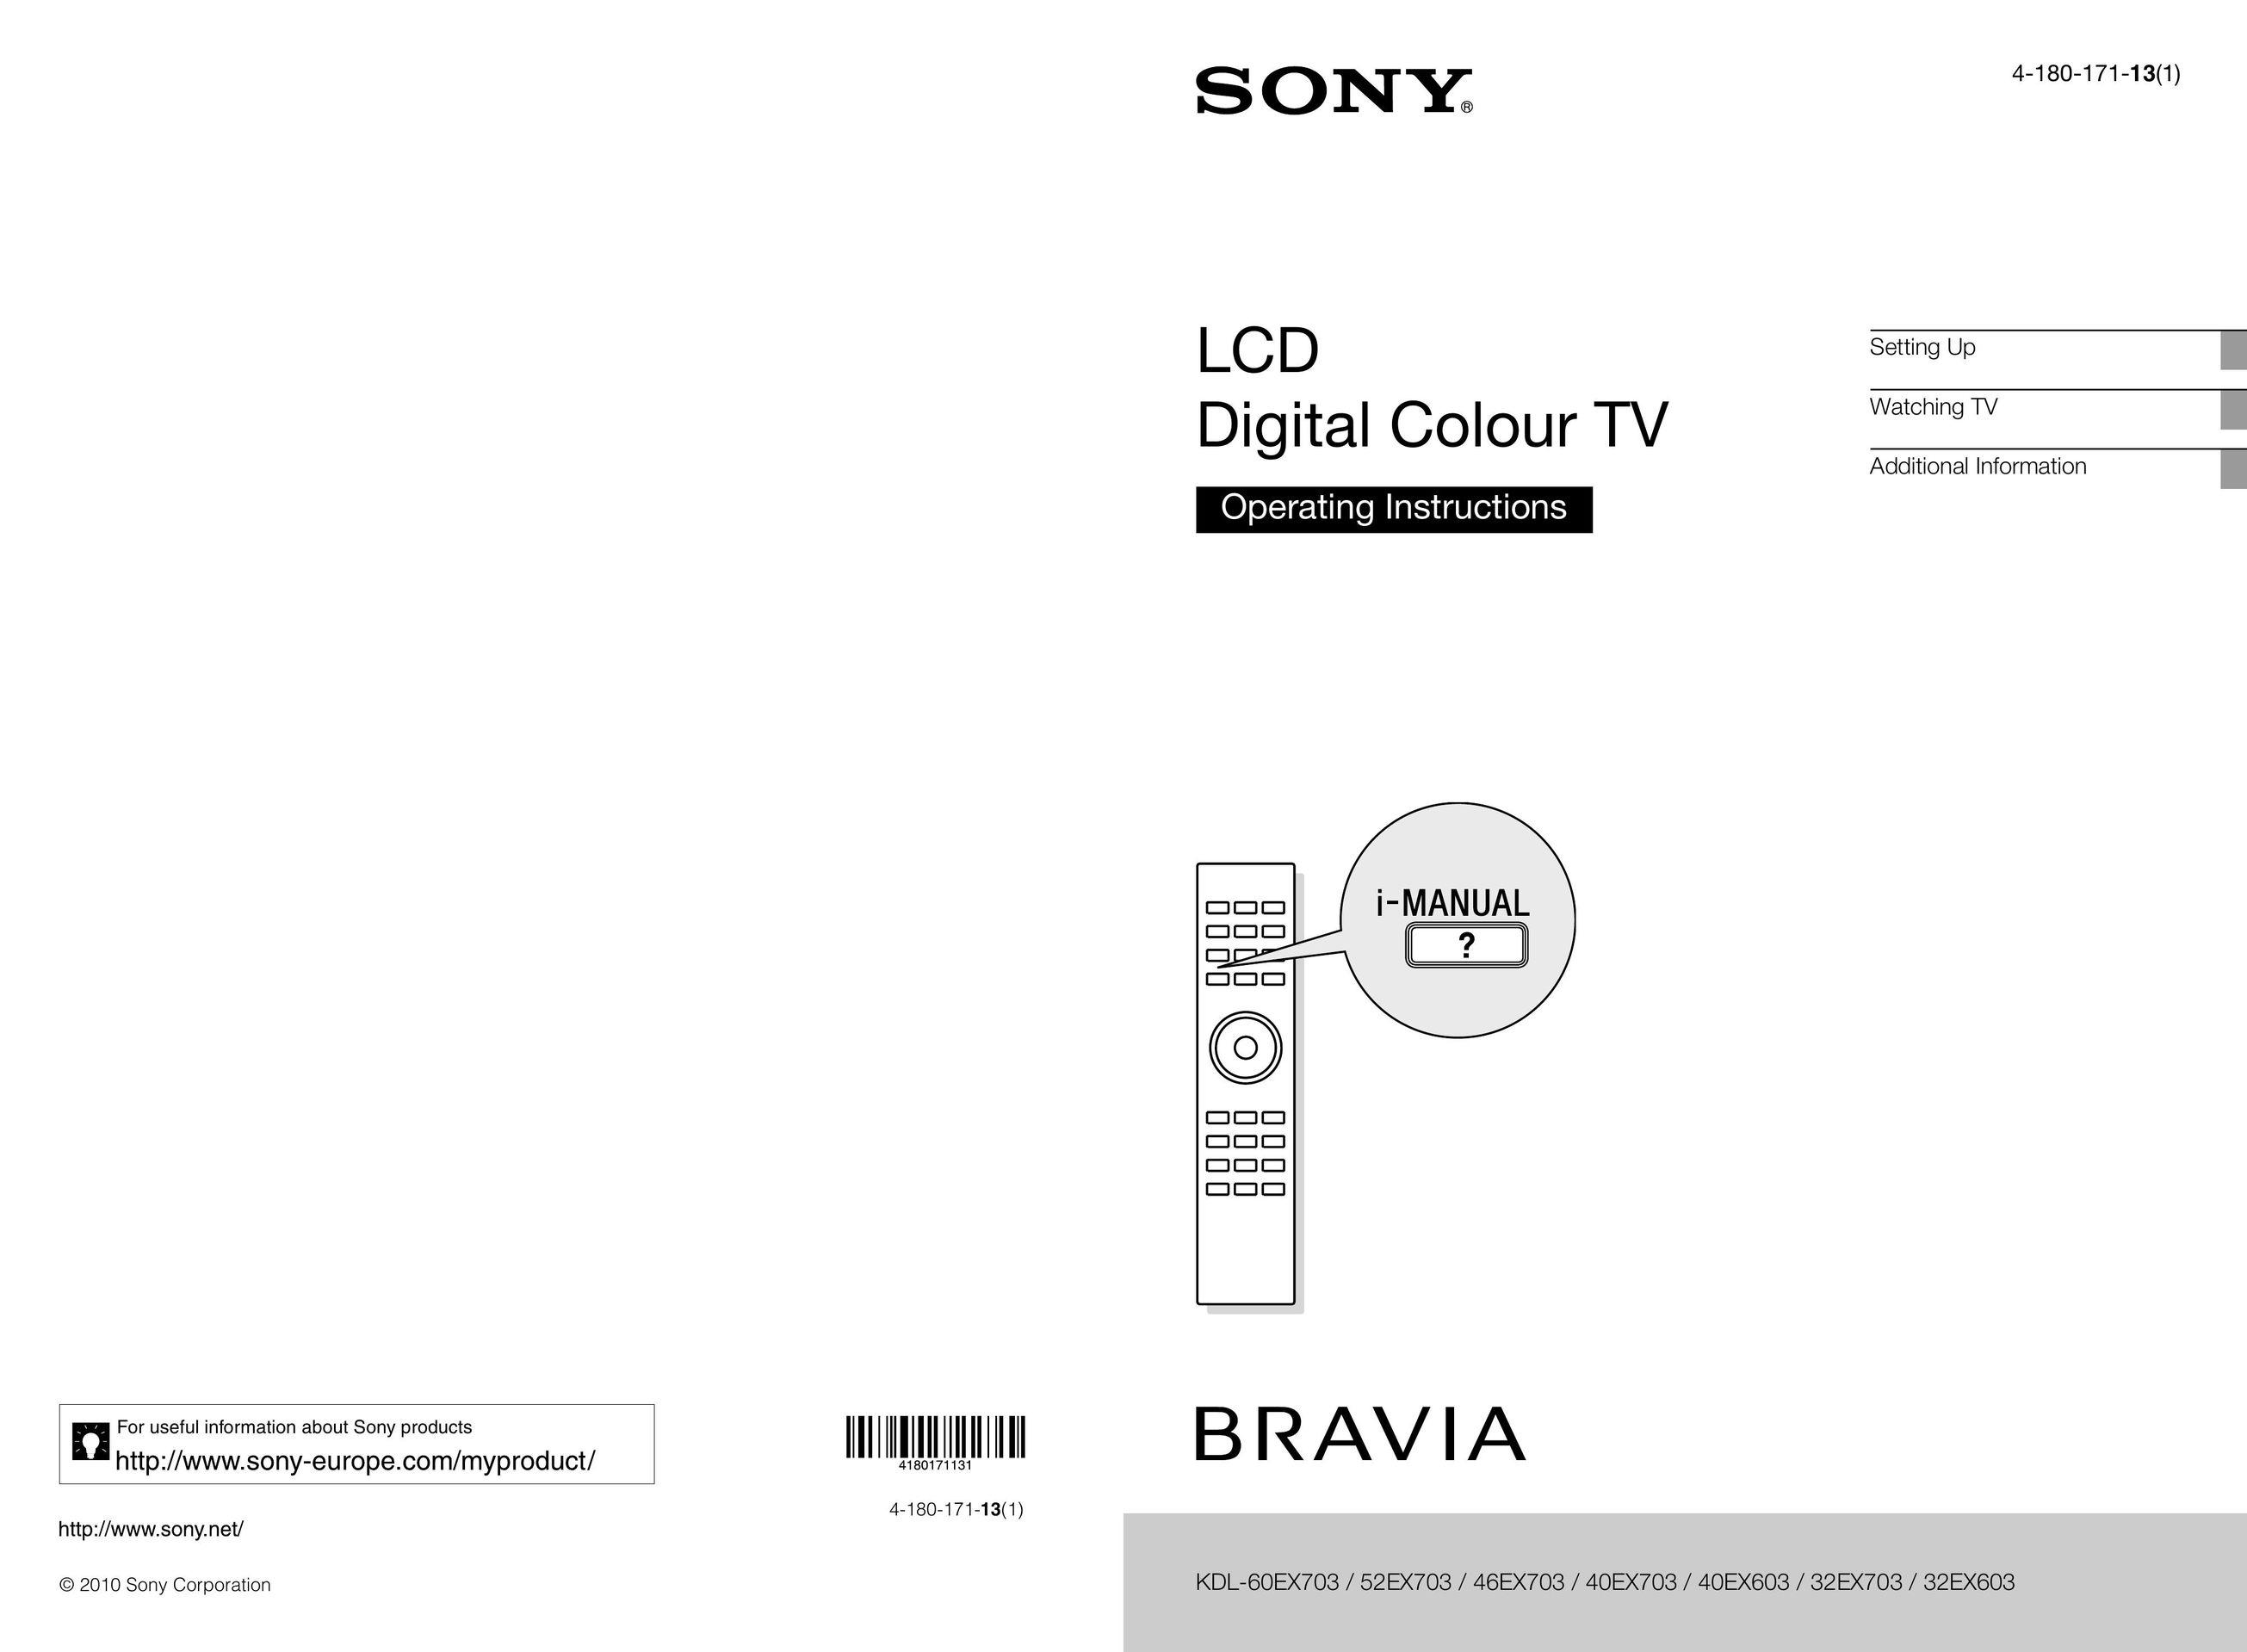 Sony 4-180-171-13(1) Car Satellite TV System User Manual